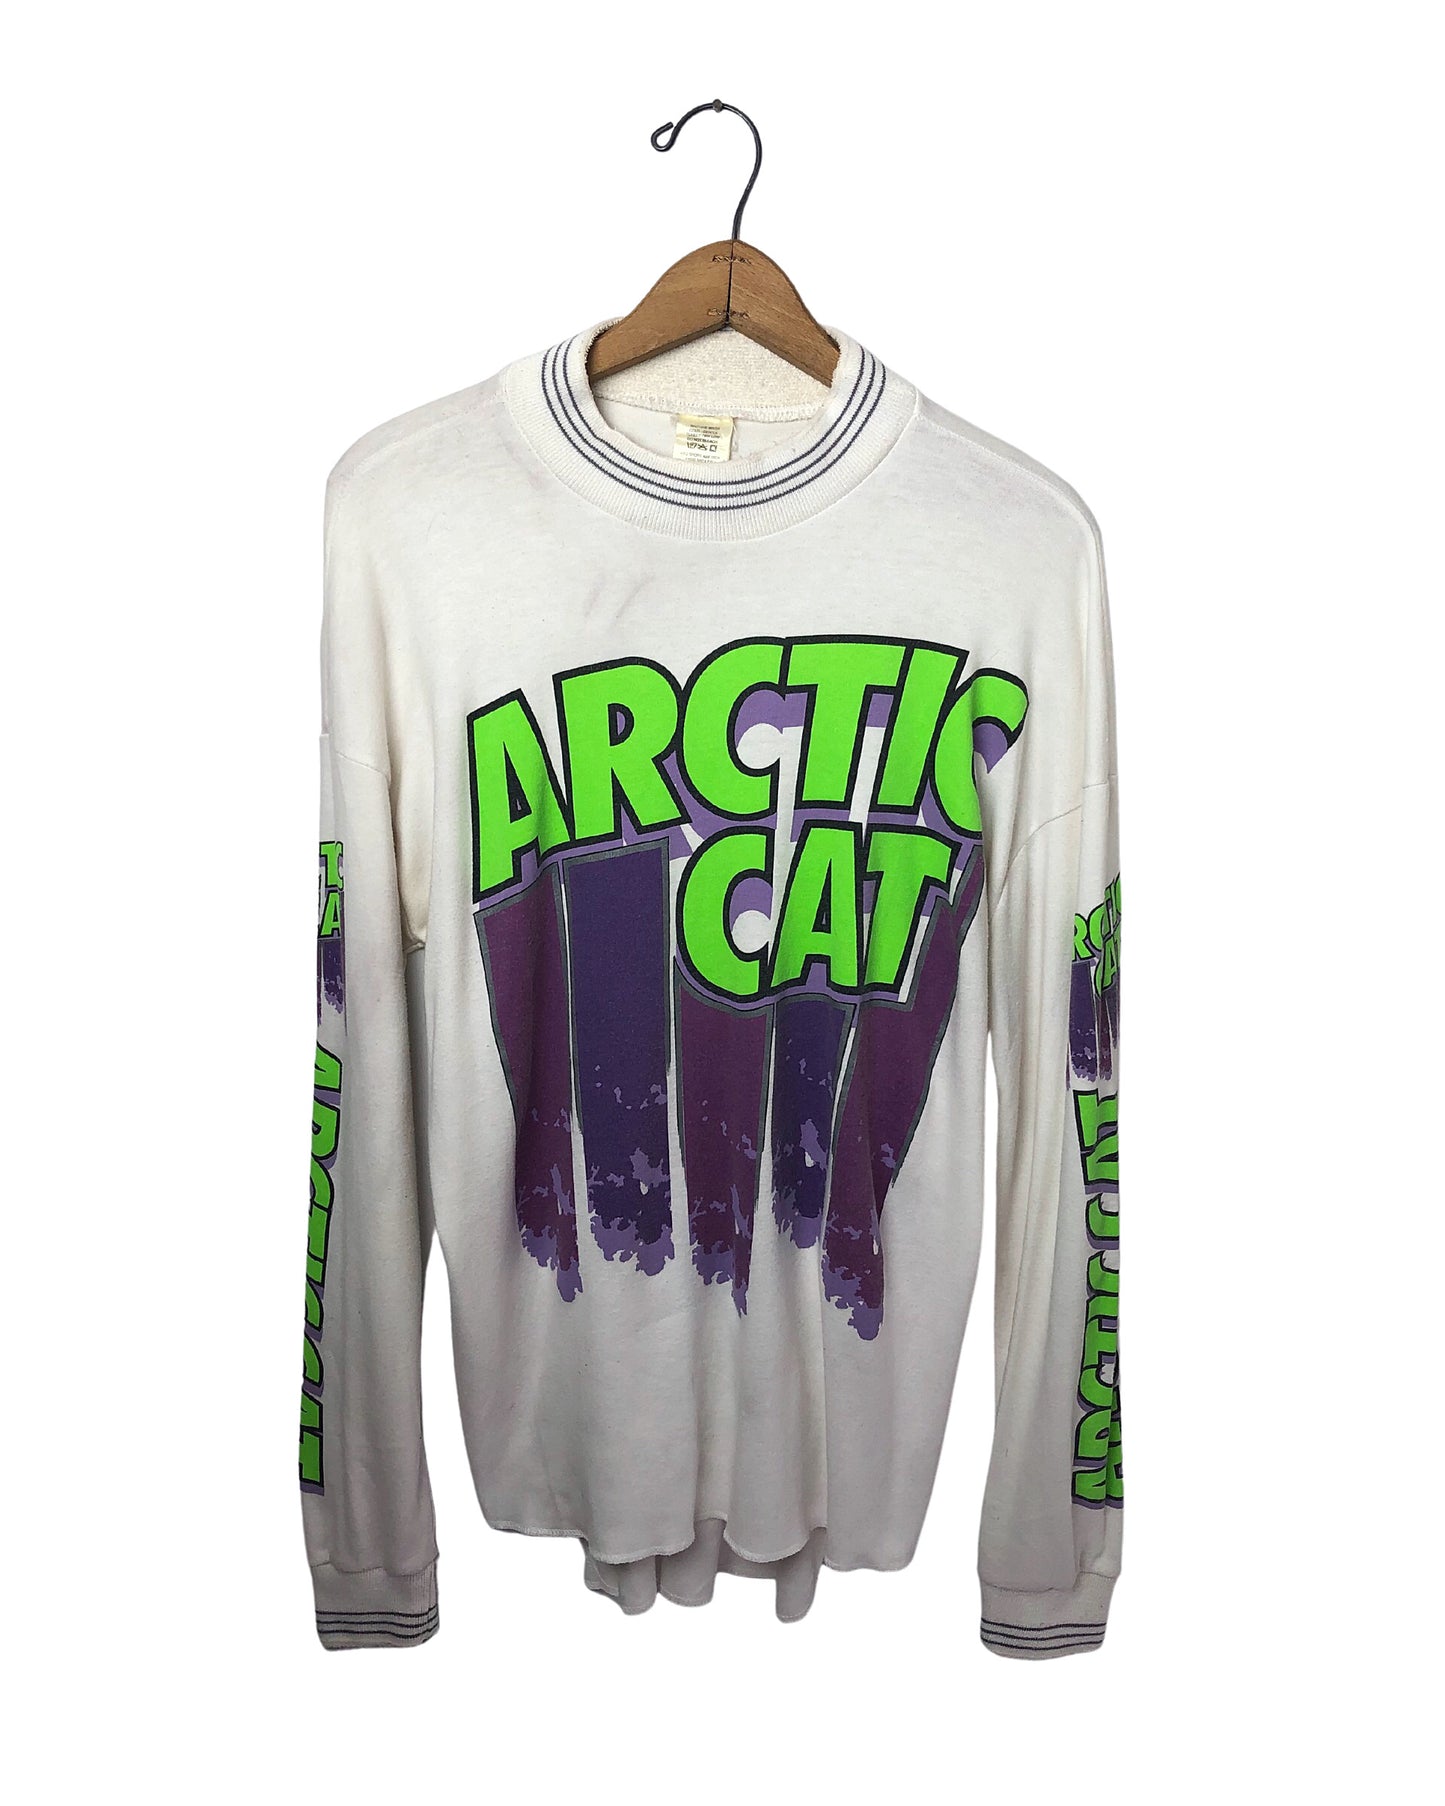 Vintage 80’s 90’s Arctic Cat Racing Team Snowmobile Padded Elbow Mockneck Tee